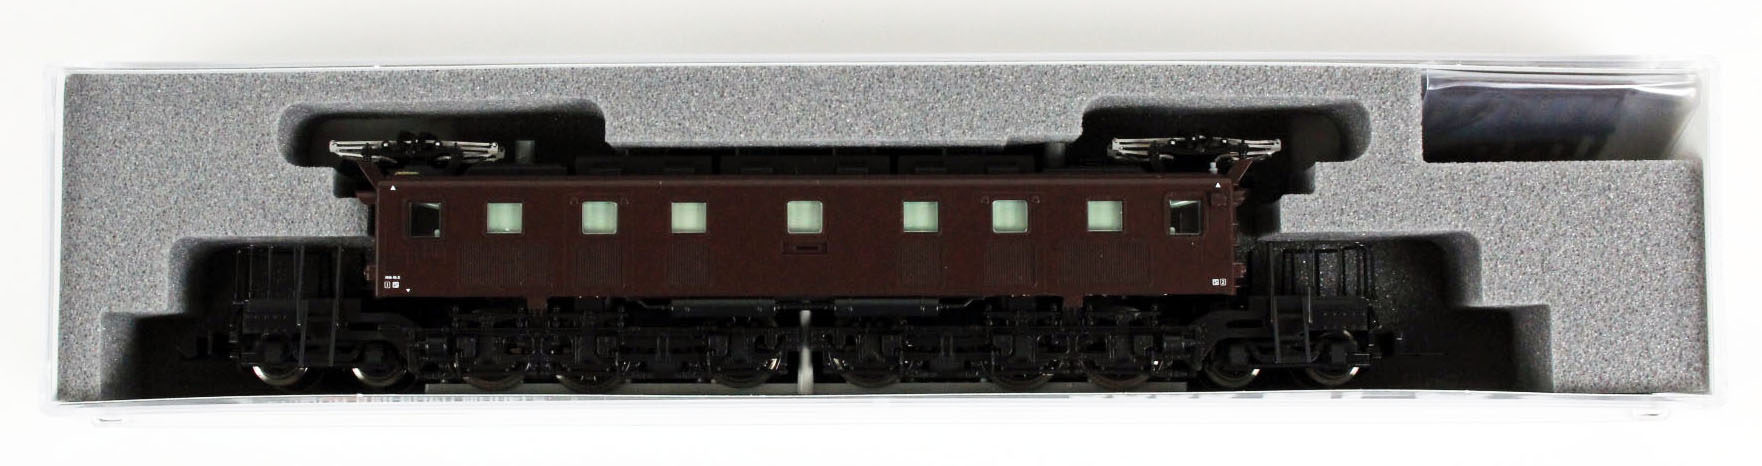 KATO 3069 EF57 鉄道模型 Nゲージ タムタムオンラインショップ札幌店